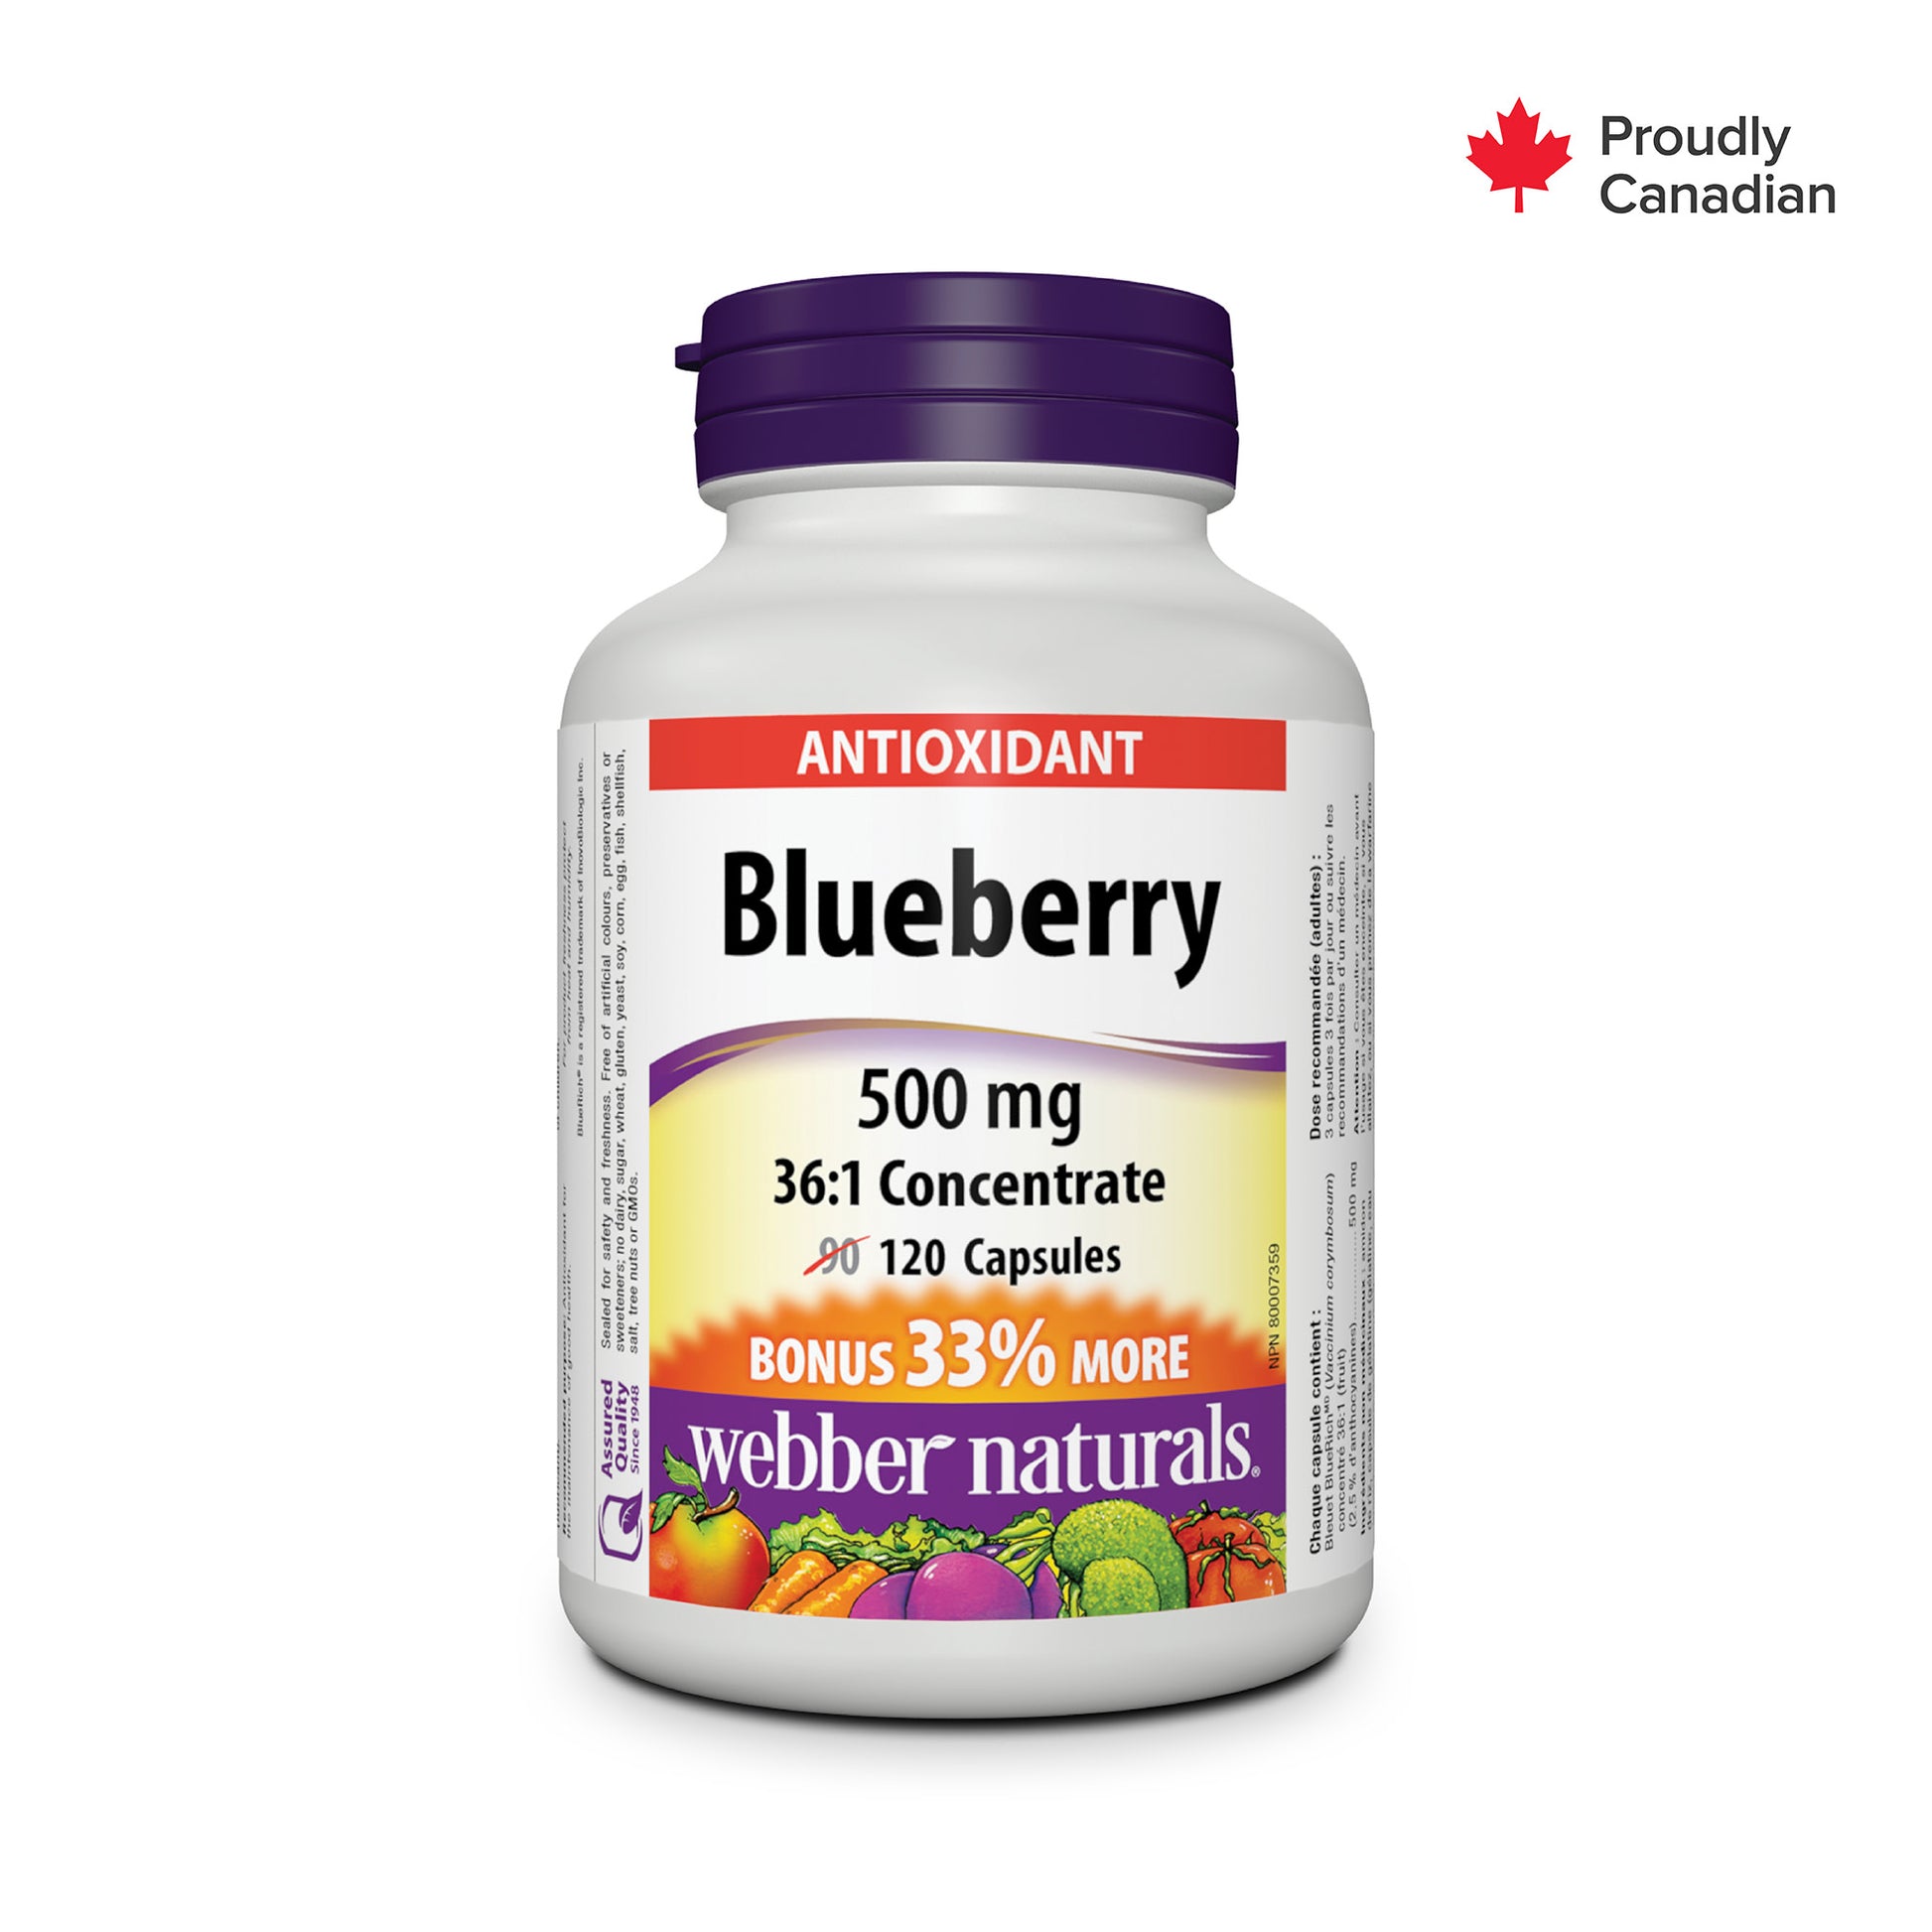 Bleuet Concentré 36:1 500 mg for Webber Naturals|v|hi-res|WN3820